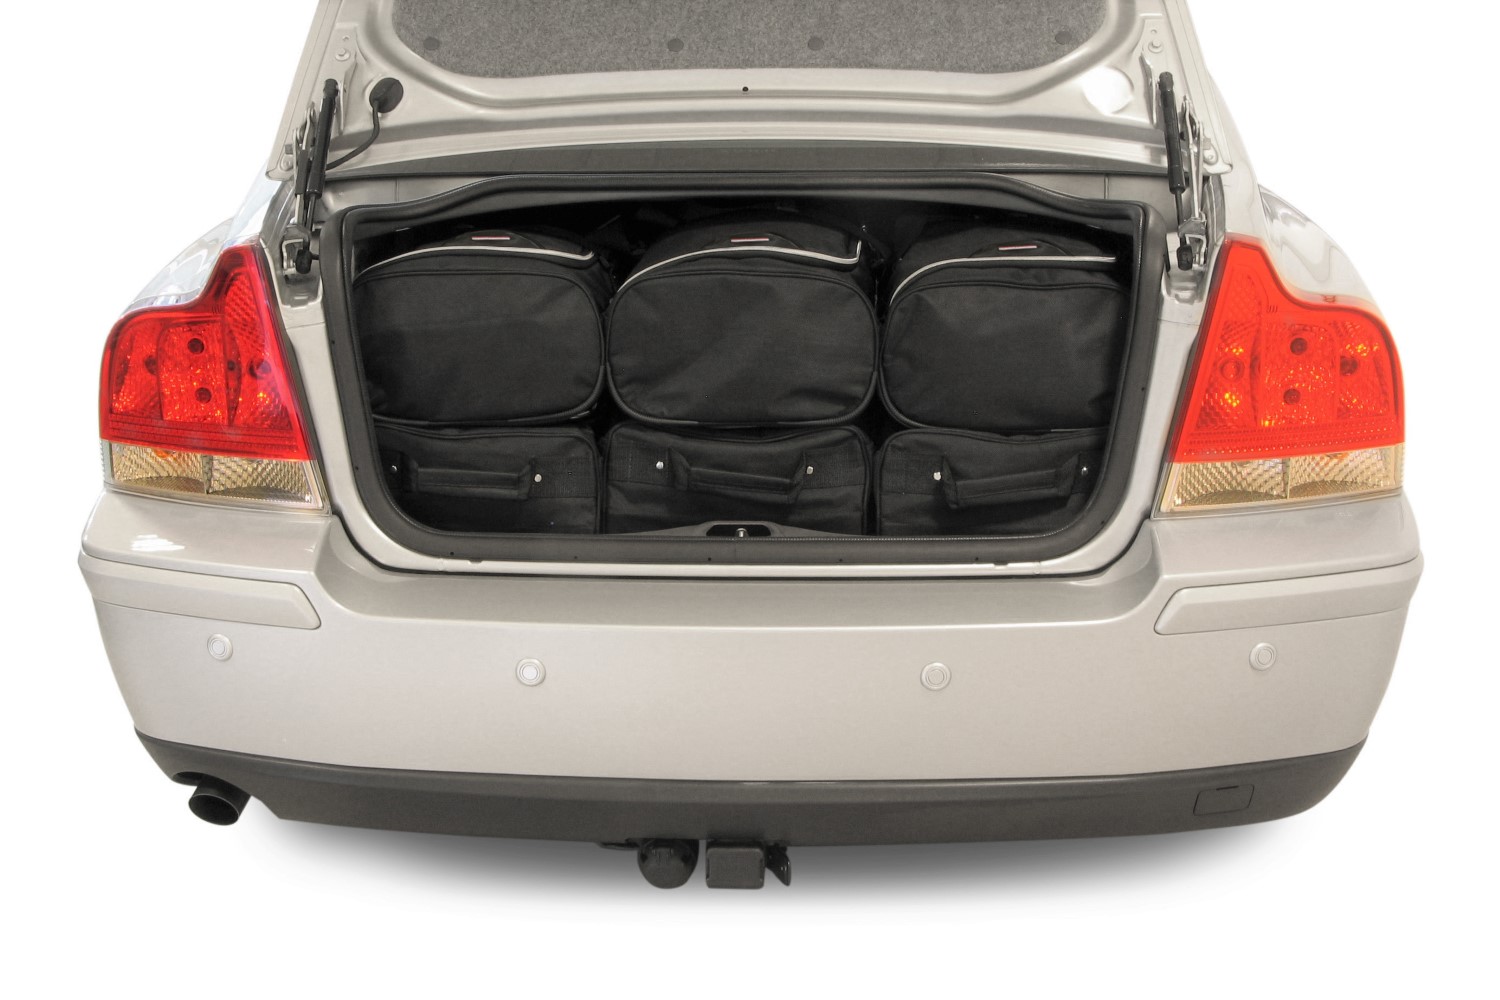 Volvo s80 багажник. Volvo v50 Trunk Size. Вольво s60 т4 белый багажник. F80 багажник. M3 g80 в багажнике.